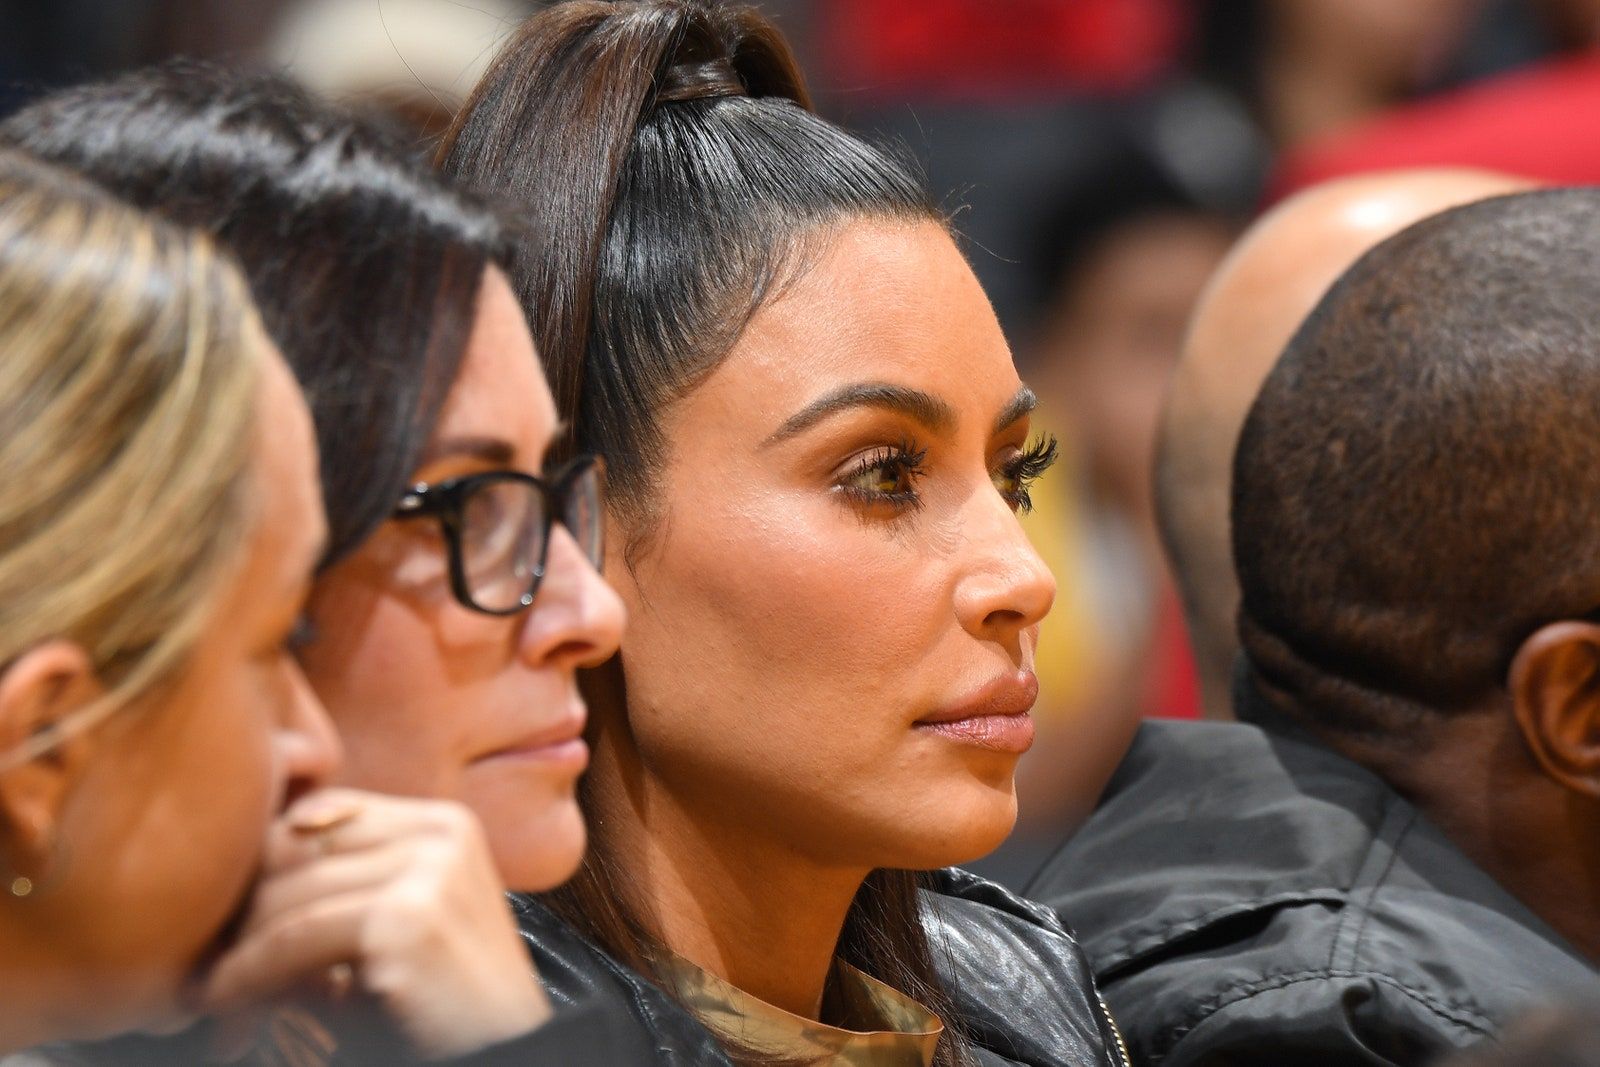 A Photo of Kim Kardashian's Pores Is Going Viral on Reddit